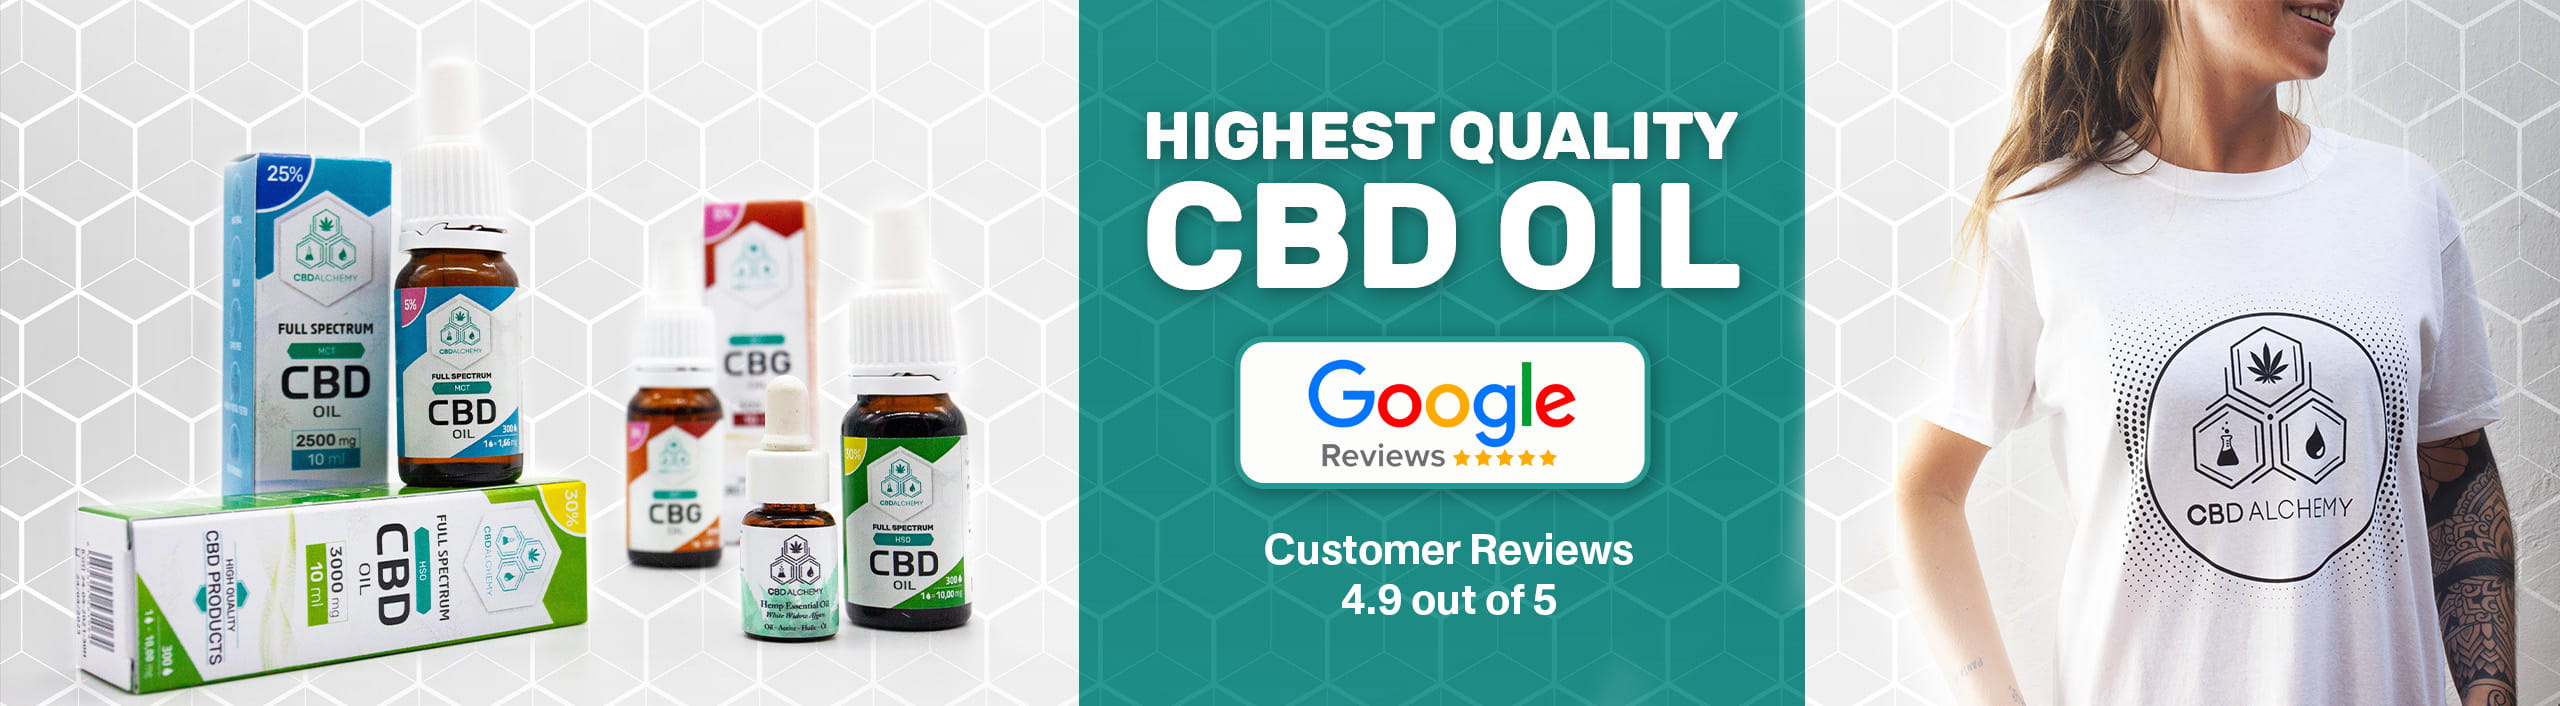 CBD Alchemy is praised on Google My Business for its high quality CBD oils